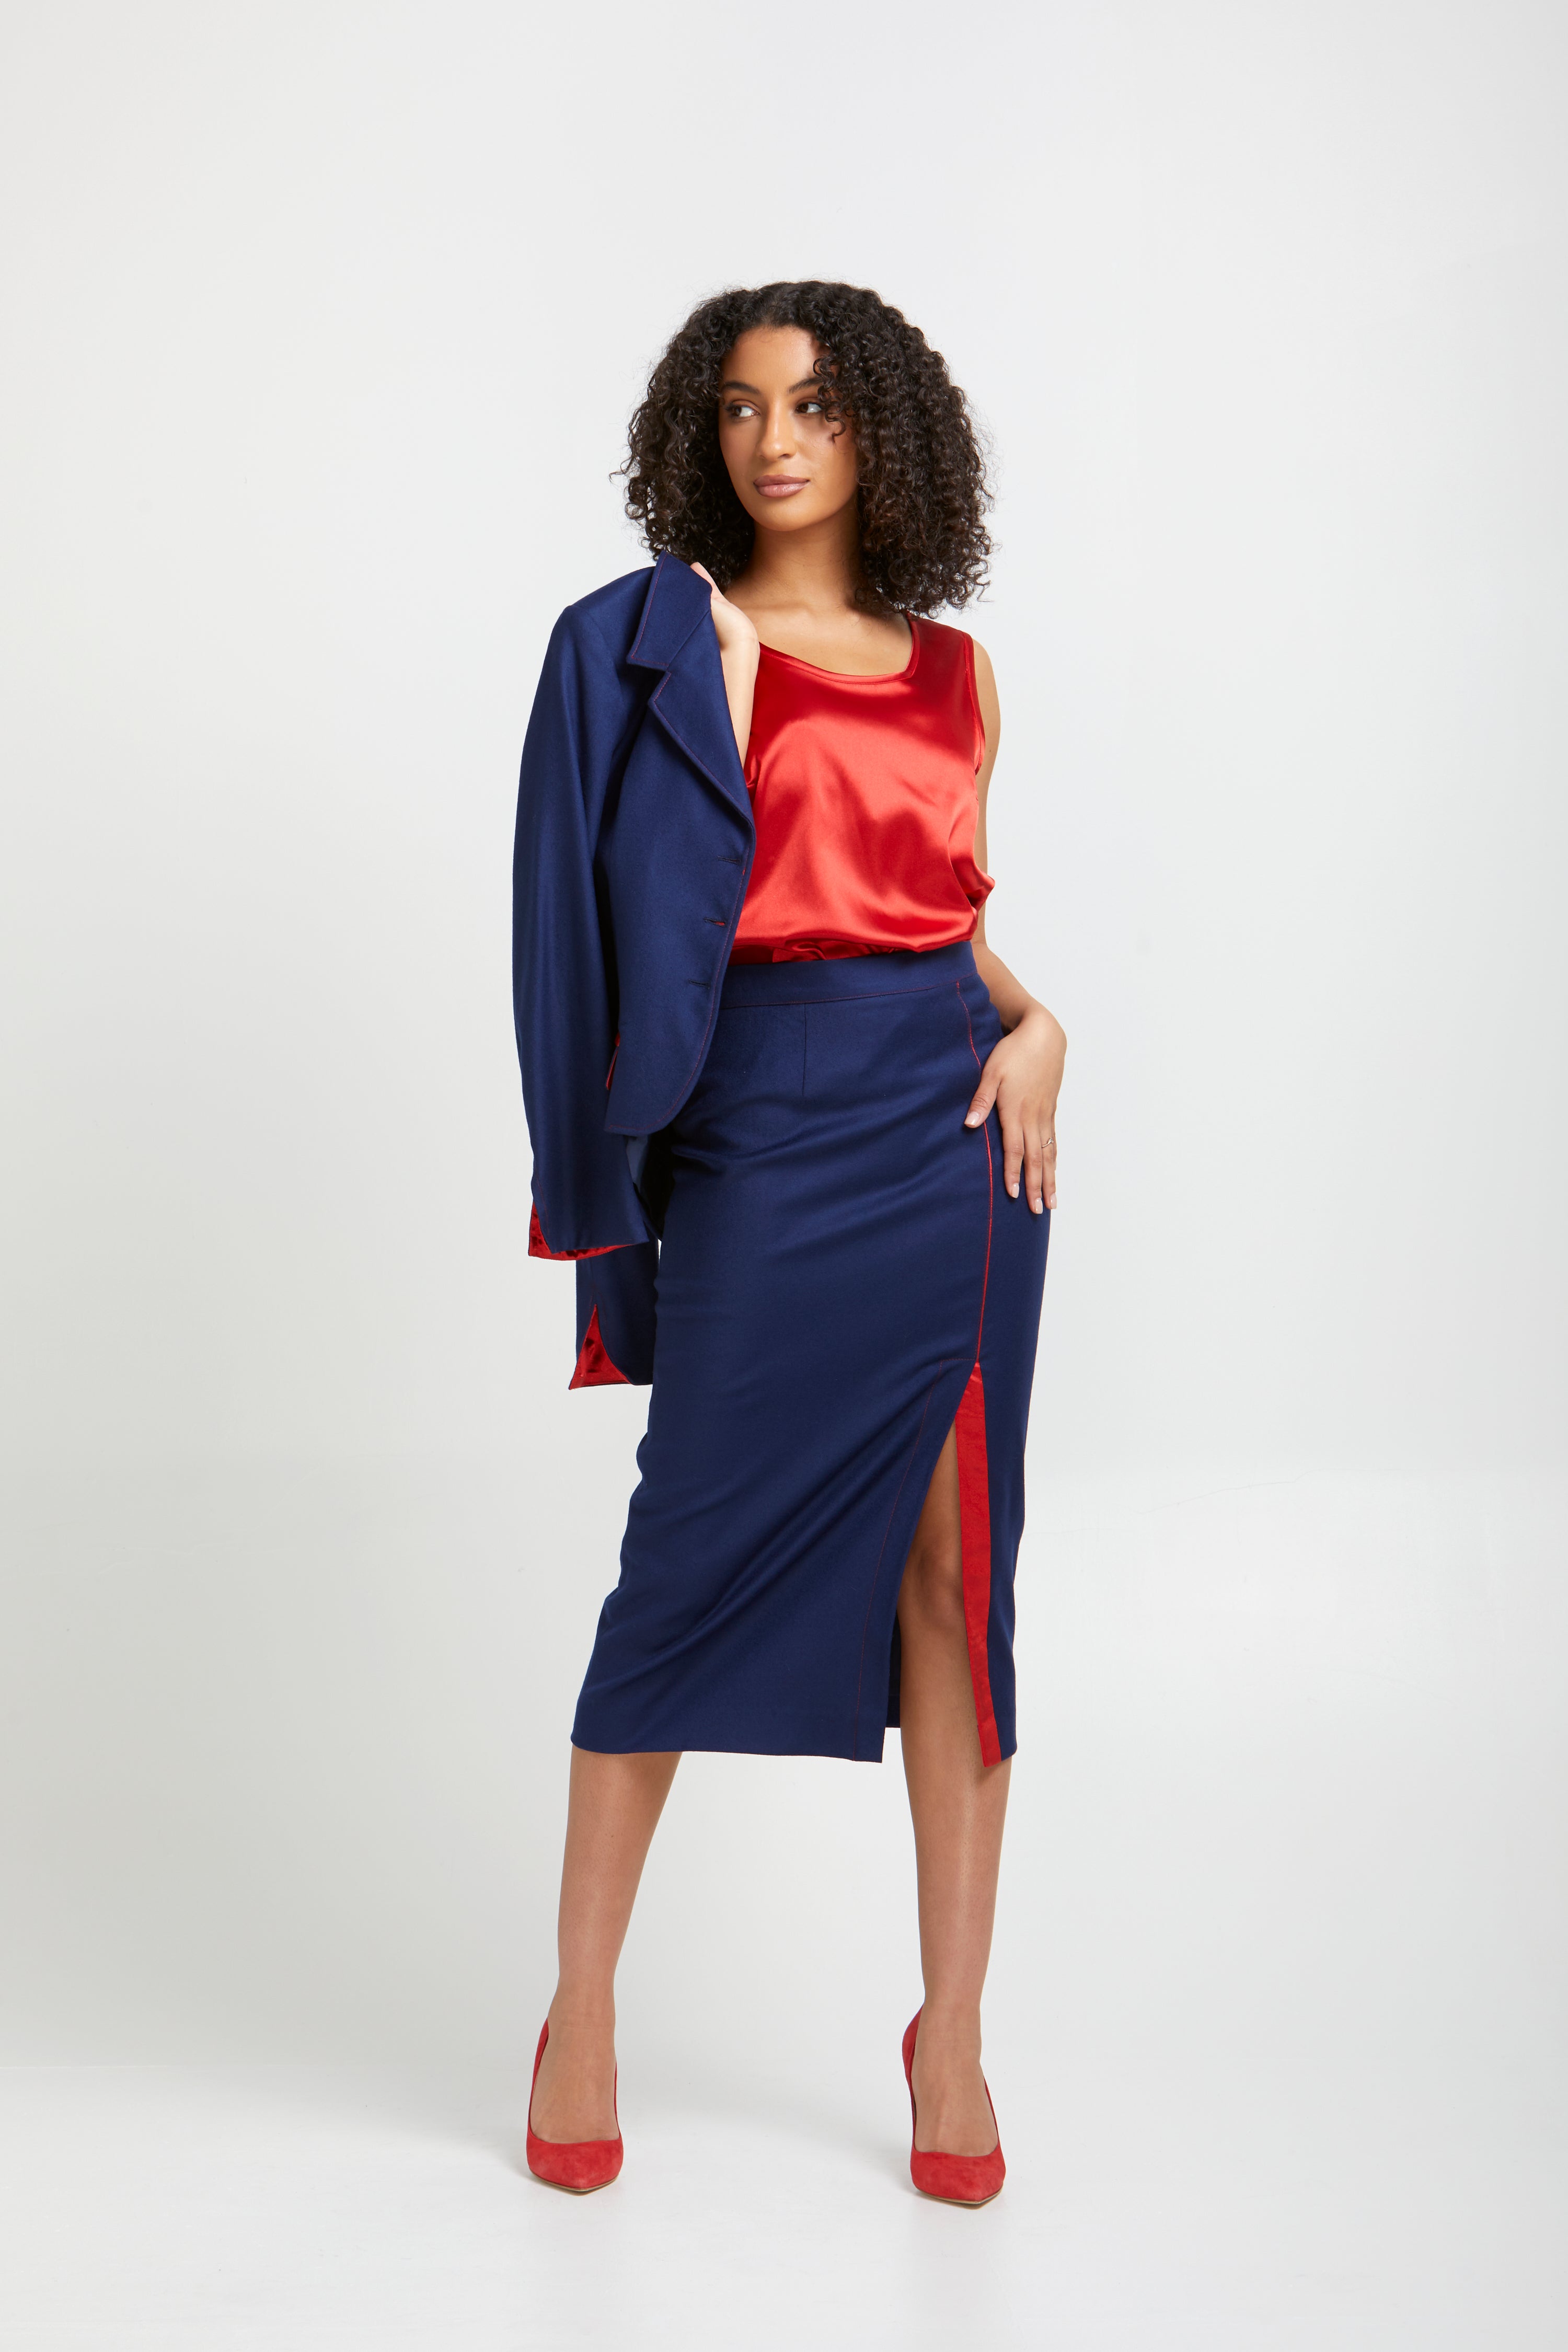 Sara Sabella 2-Piece Set Navy Blue Jacket & Midi Skirt Suit Set- Made in Italy Women's Clothing